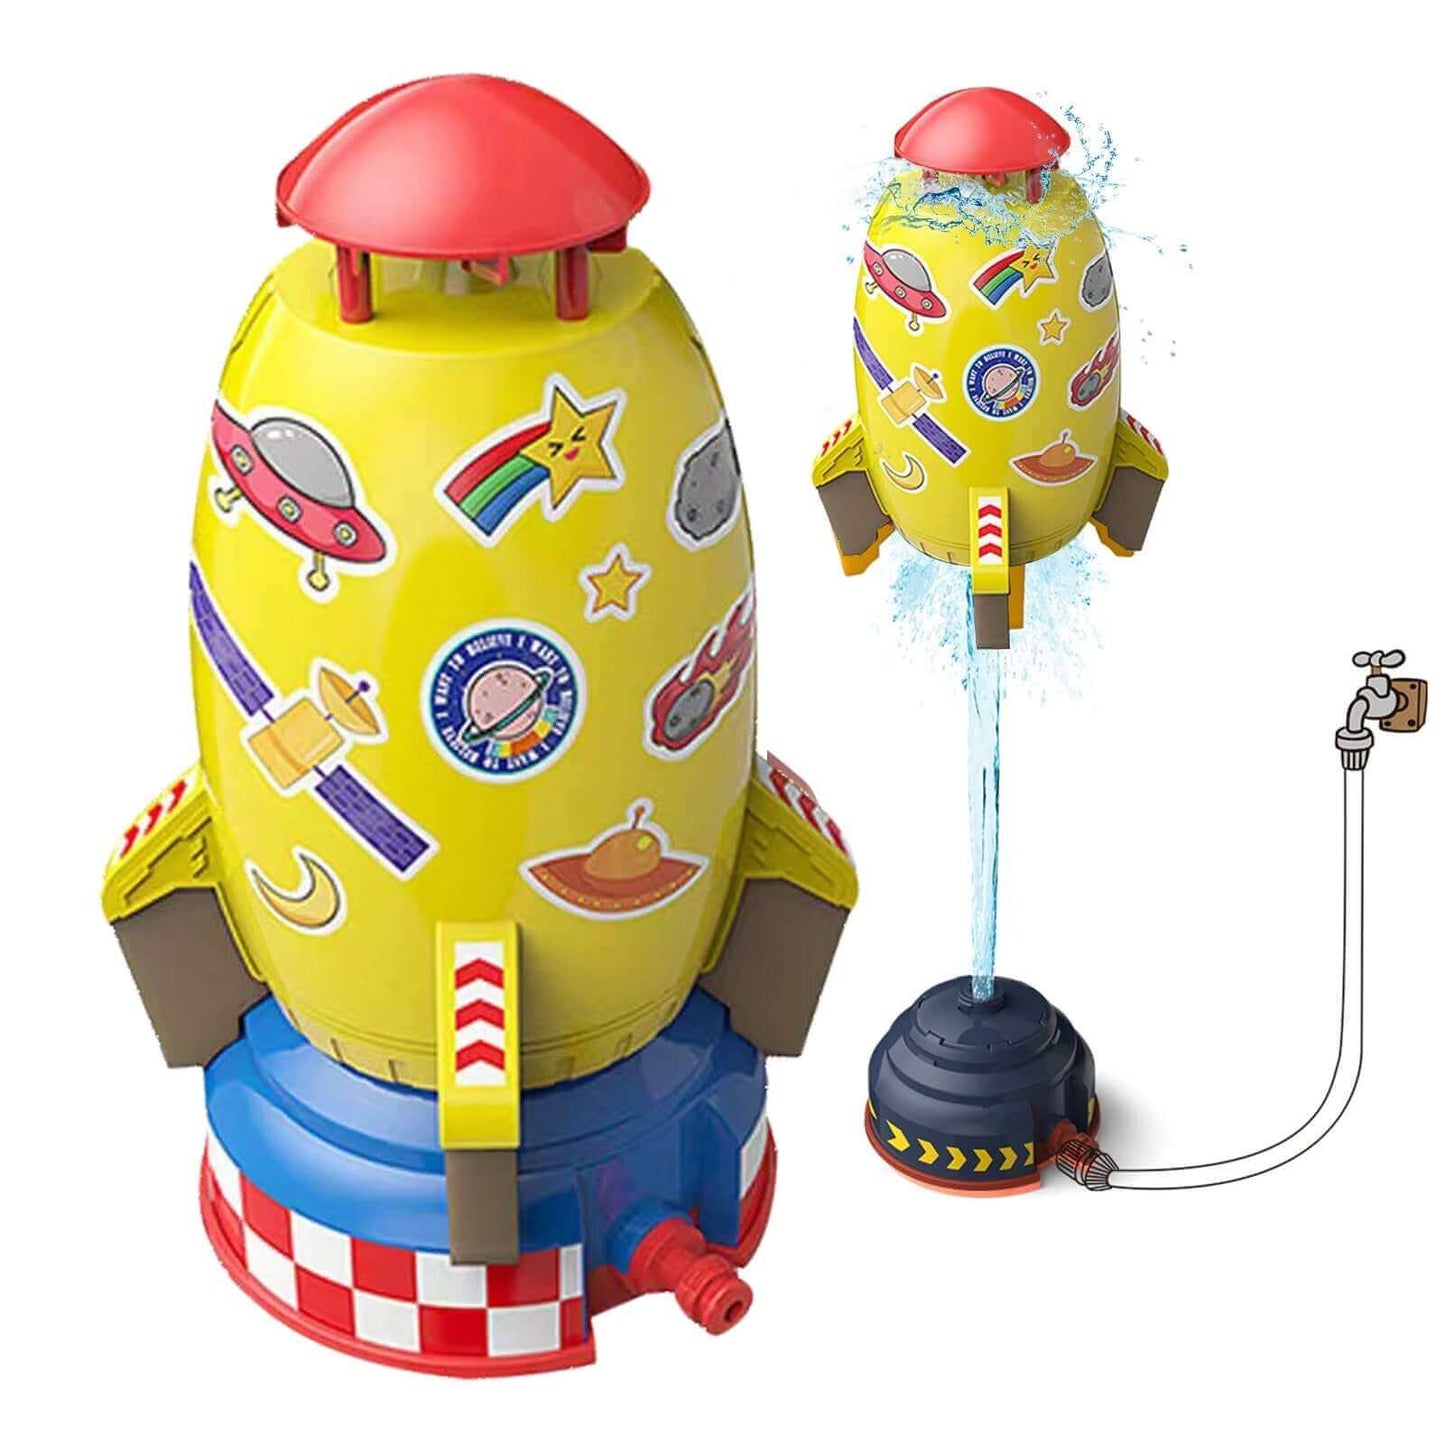 Outdoor Rocket Launcher Toy - Water-Powered Sprinkler for Garden Fun & Interactive Play - Kids' Lawn Water Spray Rocket